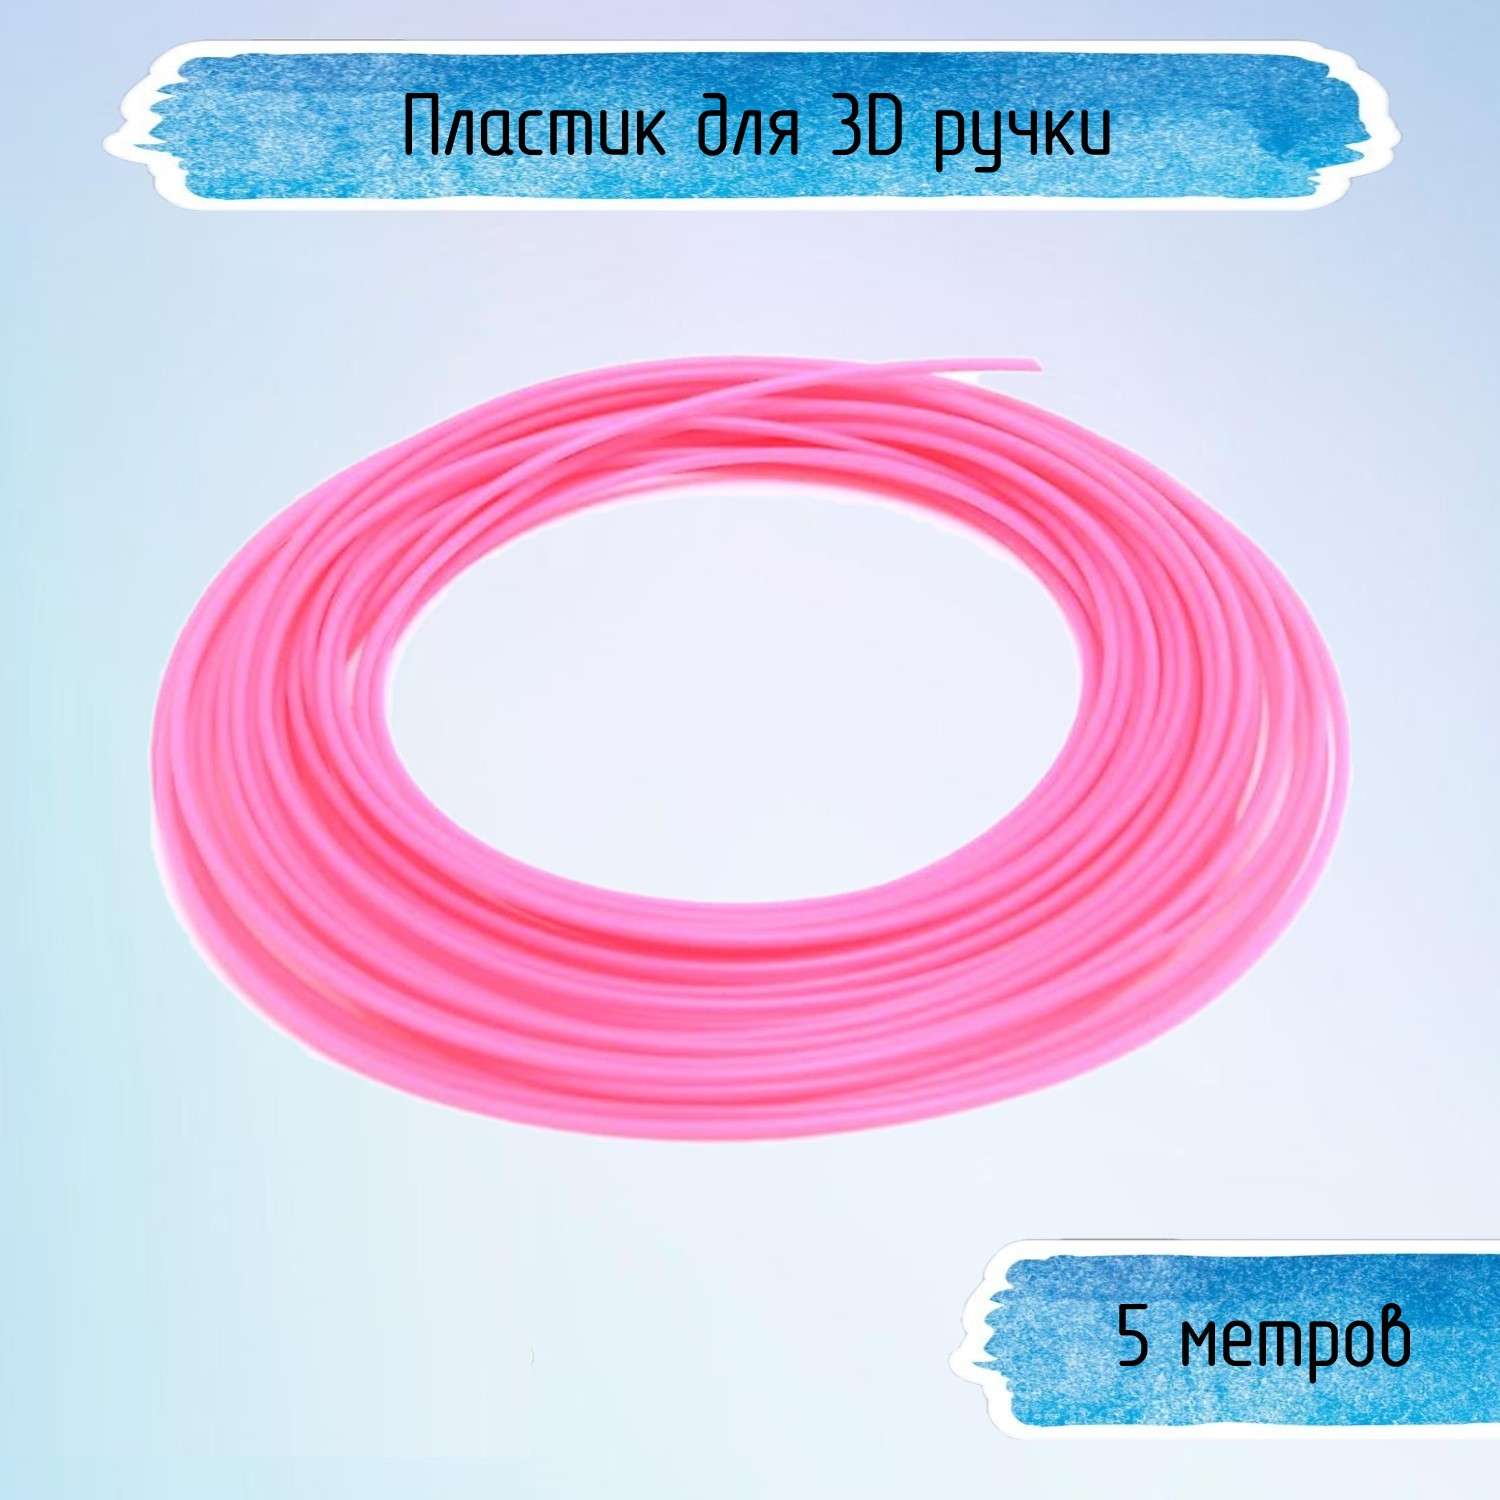 Пластик для 3D ручки Uniglodis светло-розовый - фото 1